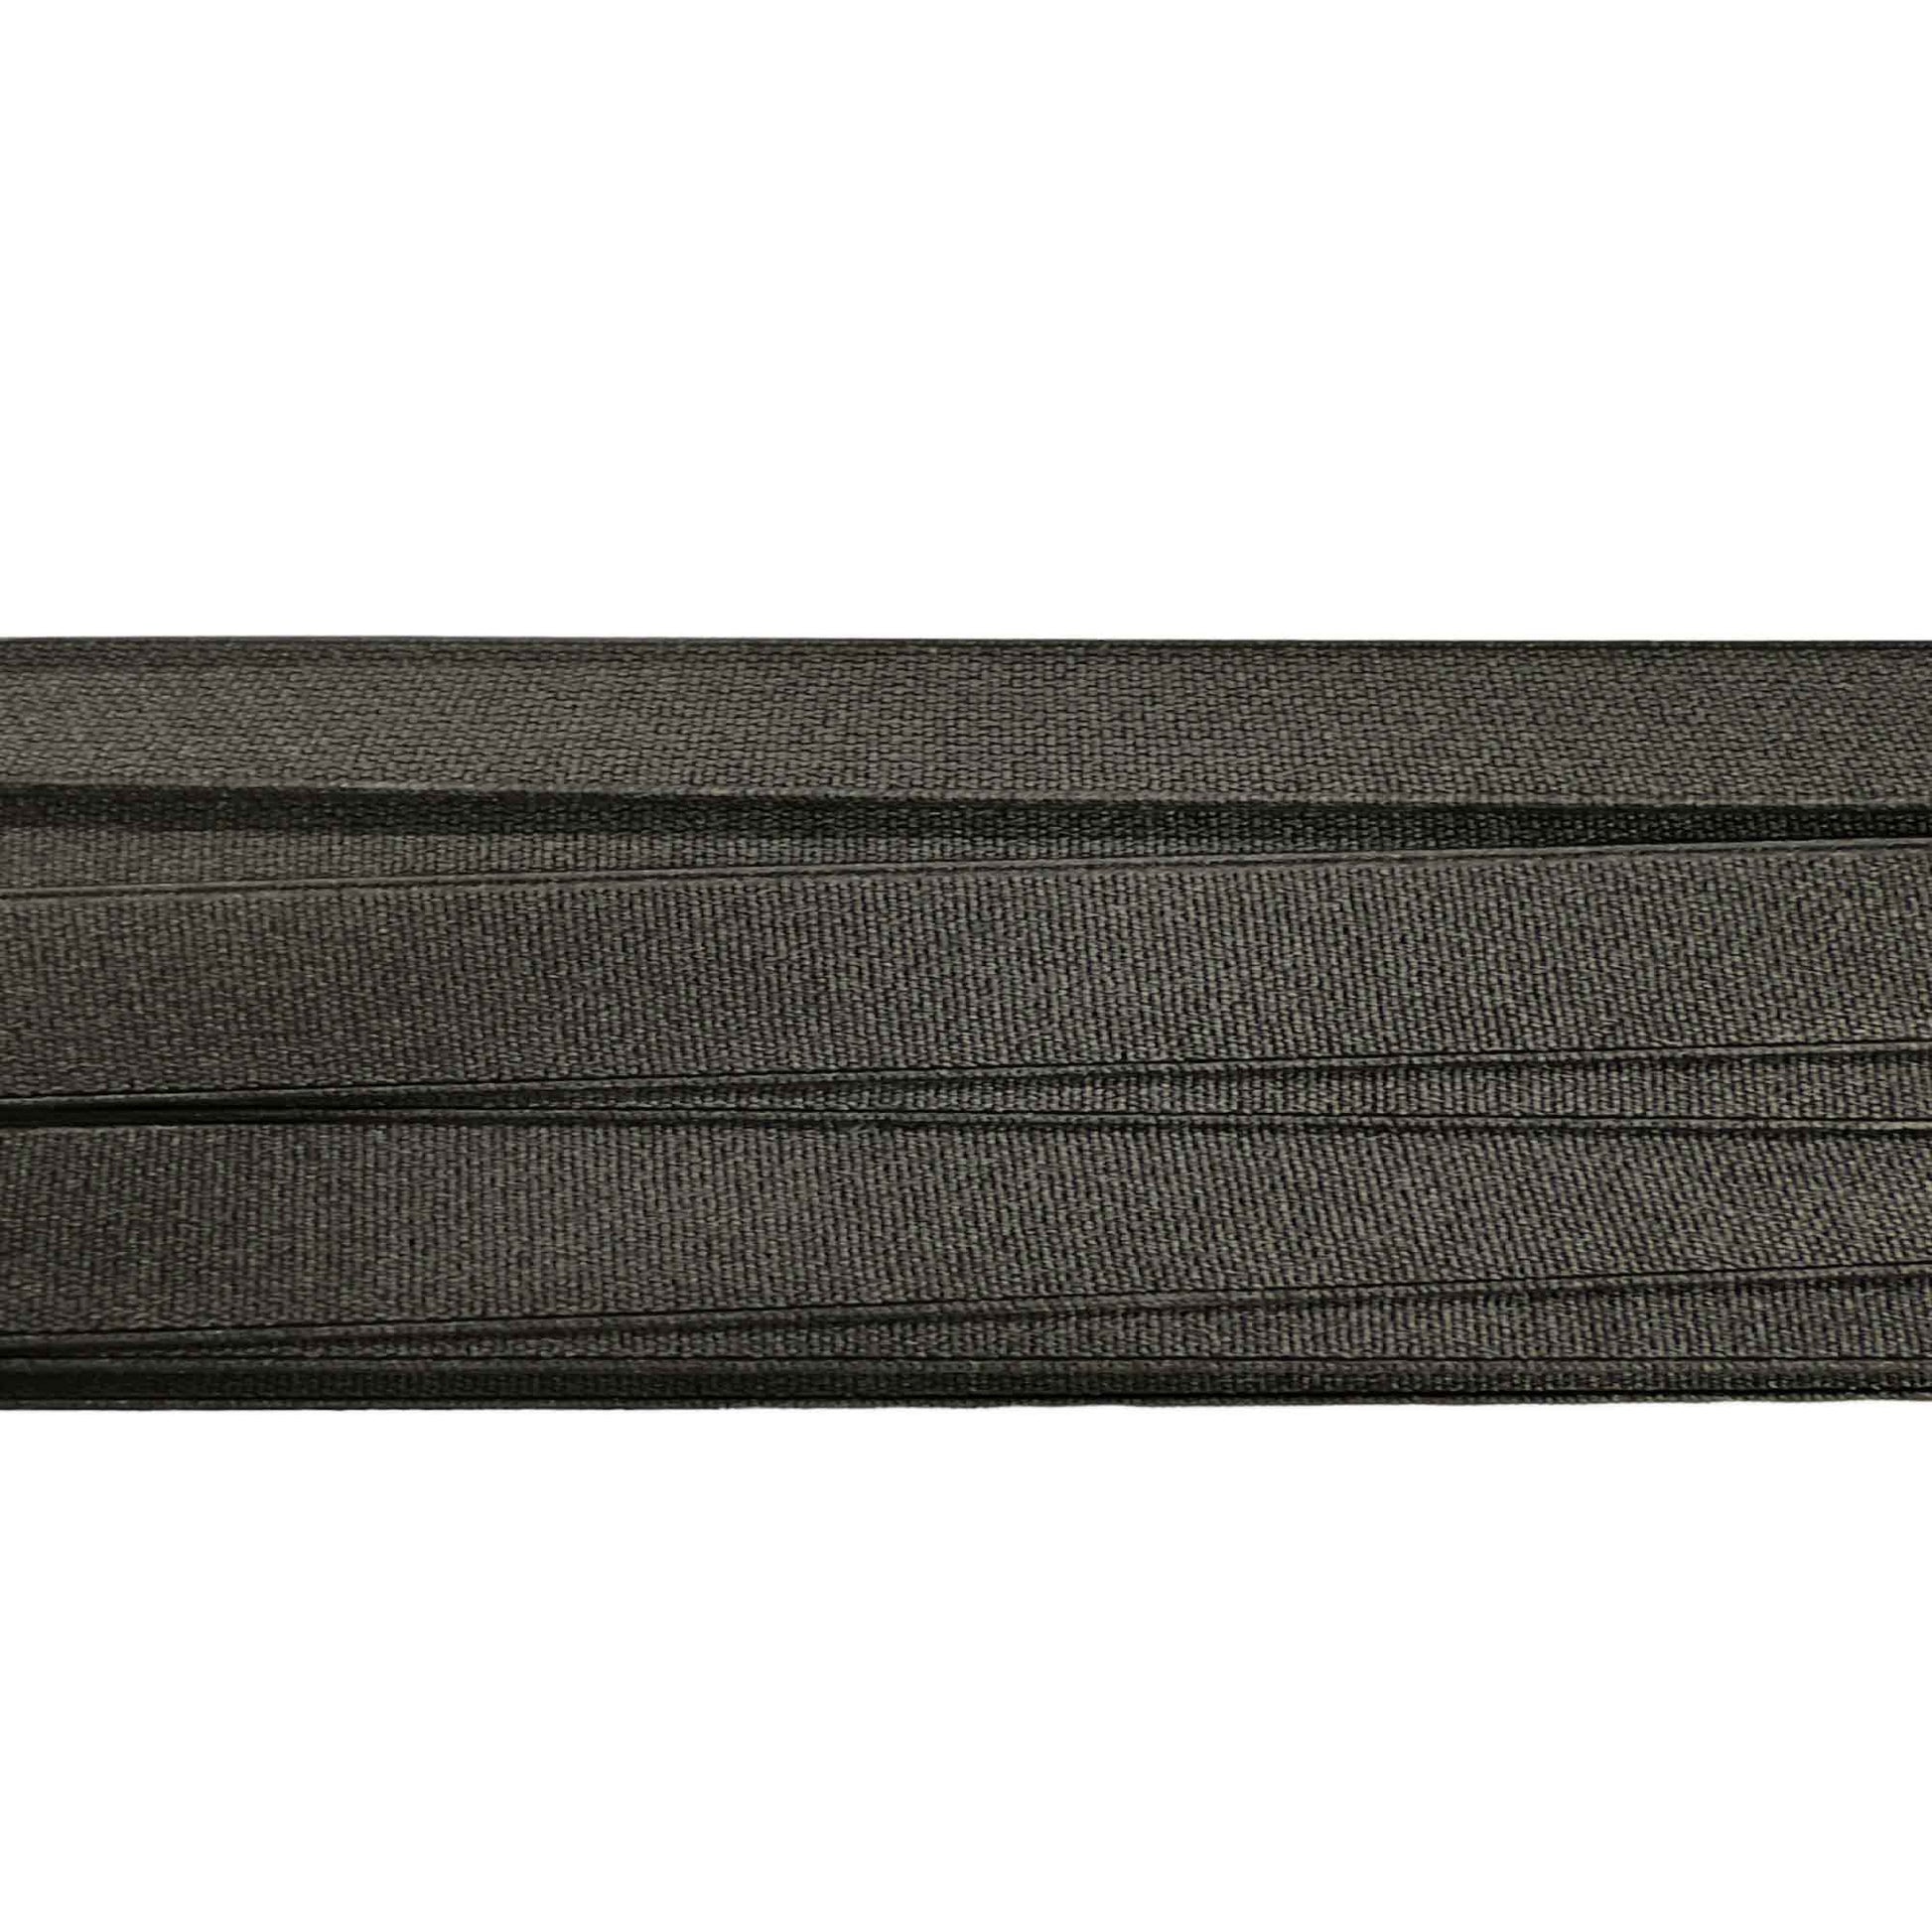 12mm Black High Density Elastic Roll 40m - Birch Sewing Fabric Polyester Craft